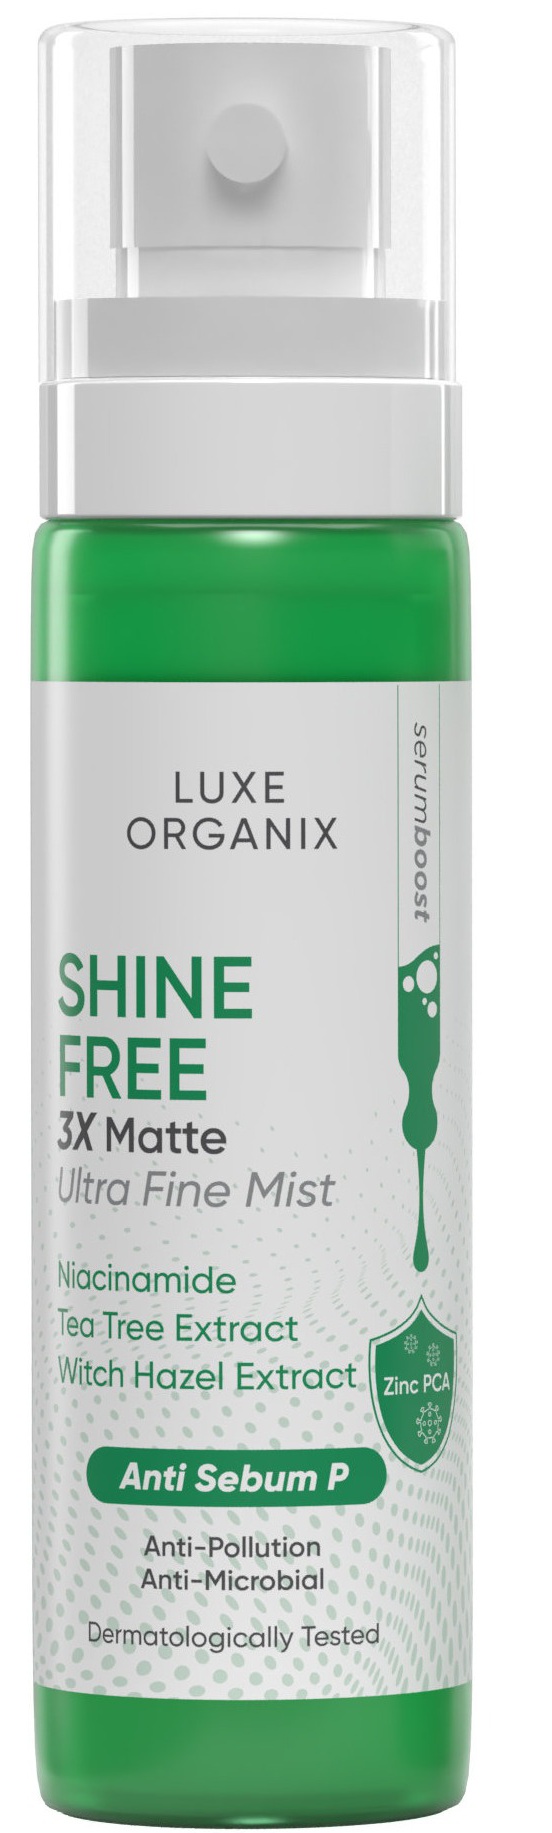 Luxe Organix Shine Free 3x Matte Ultra Fine Mist